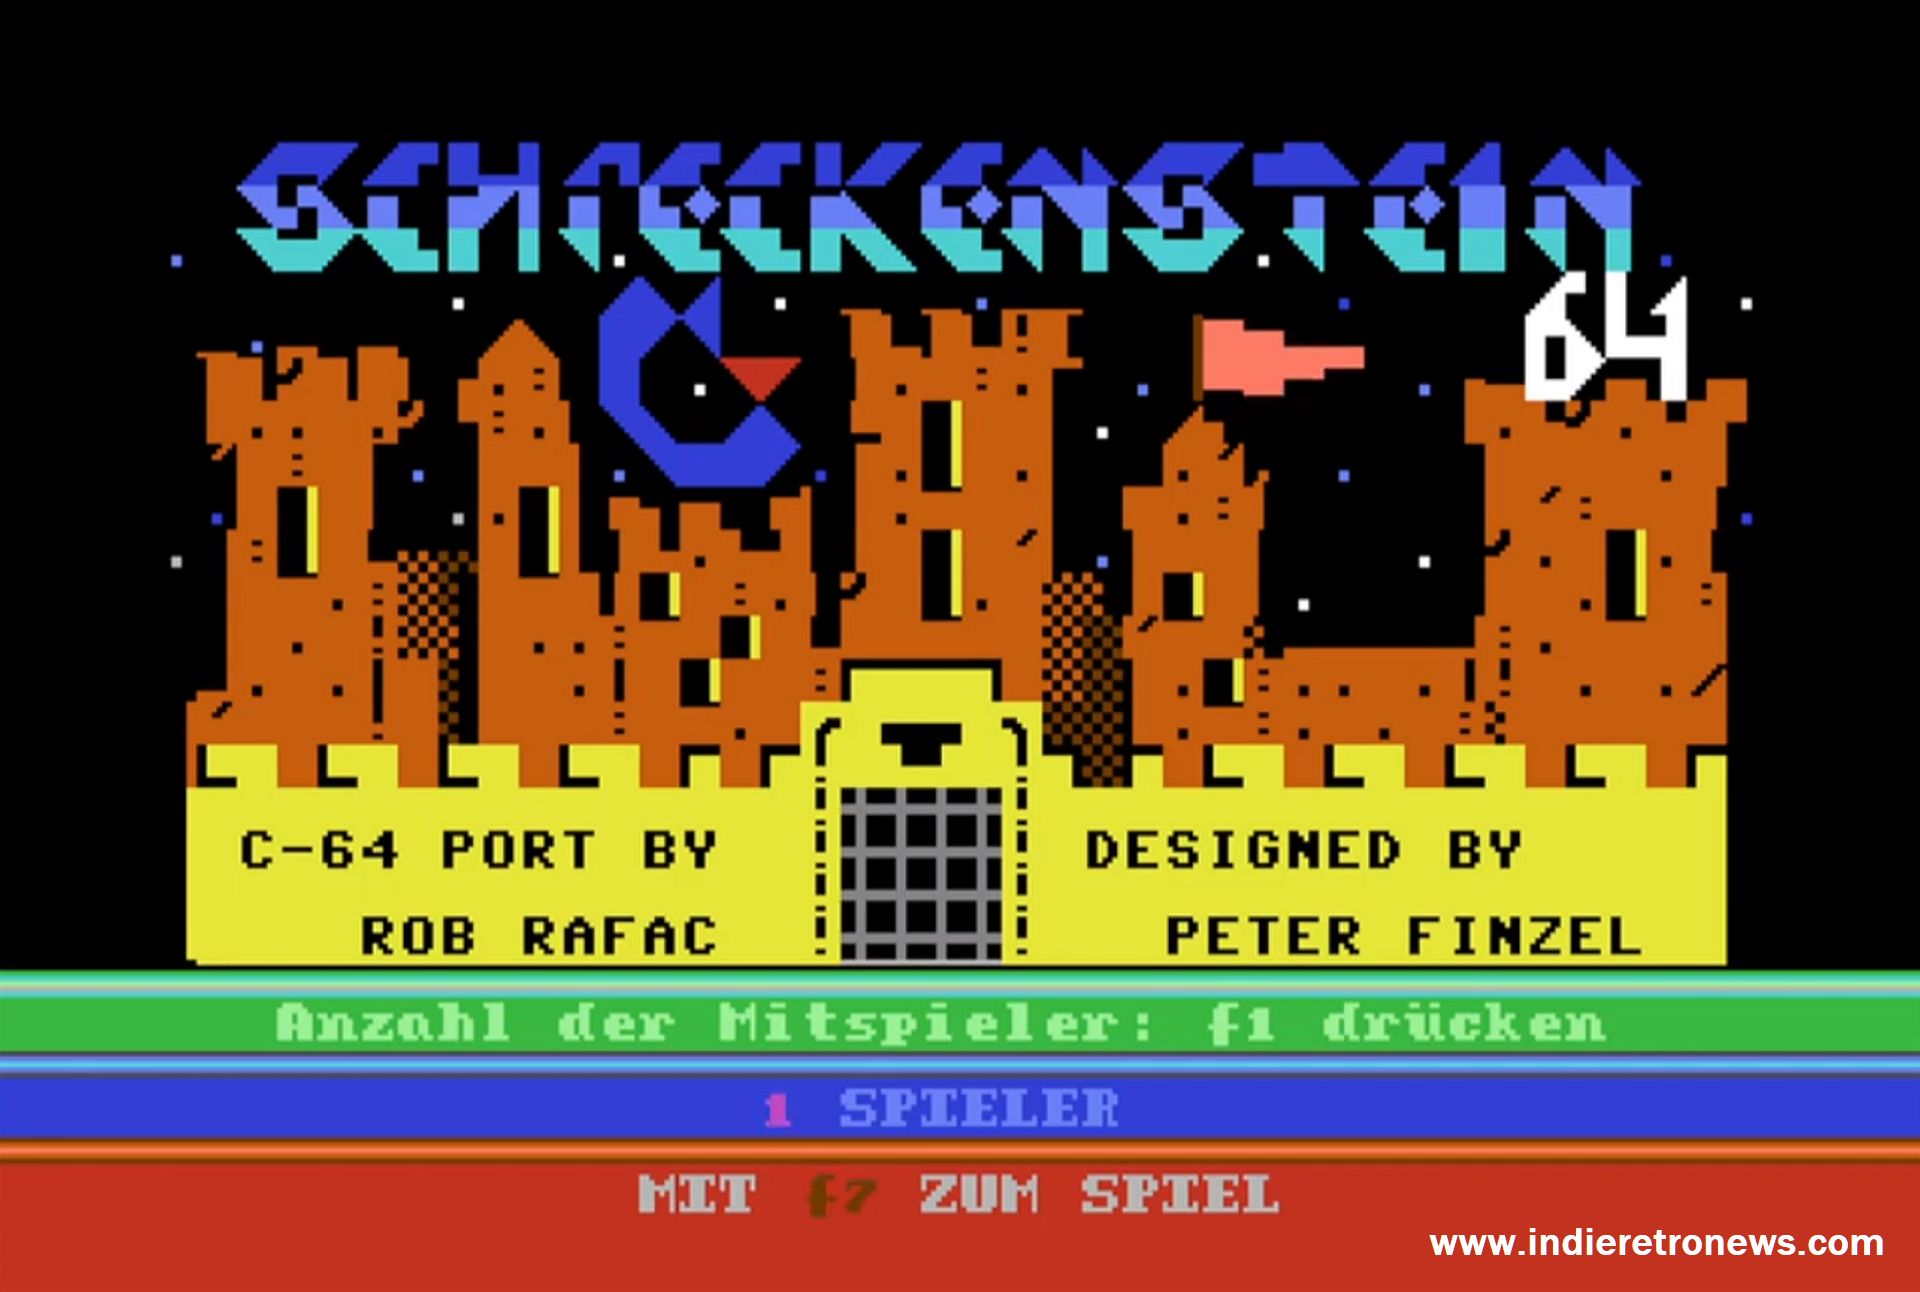 7 Forgotten Commodore 64 Gaming Classics